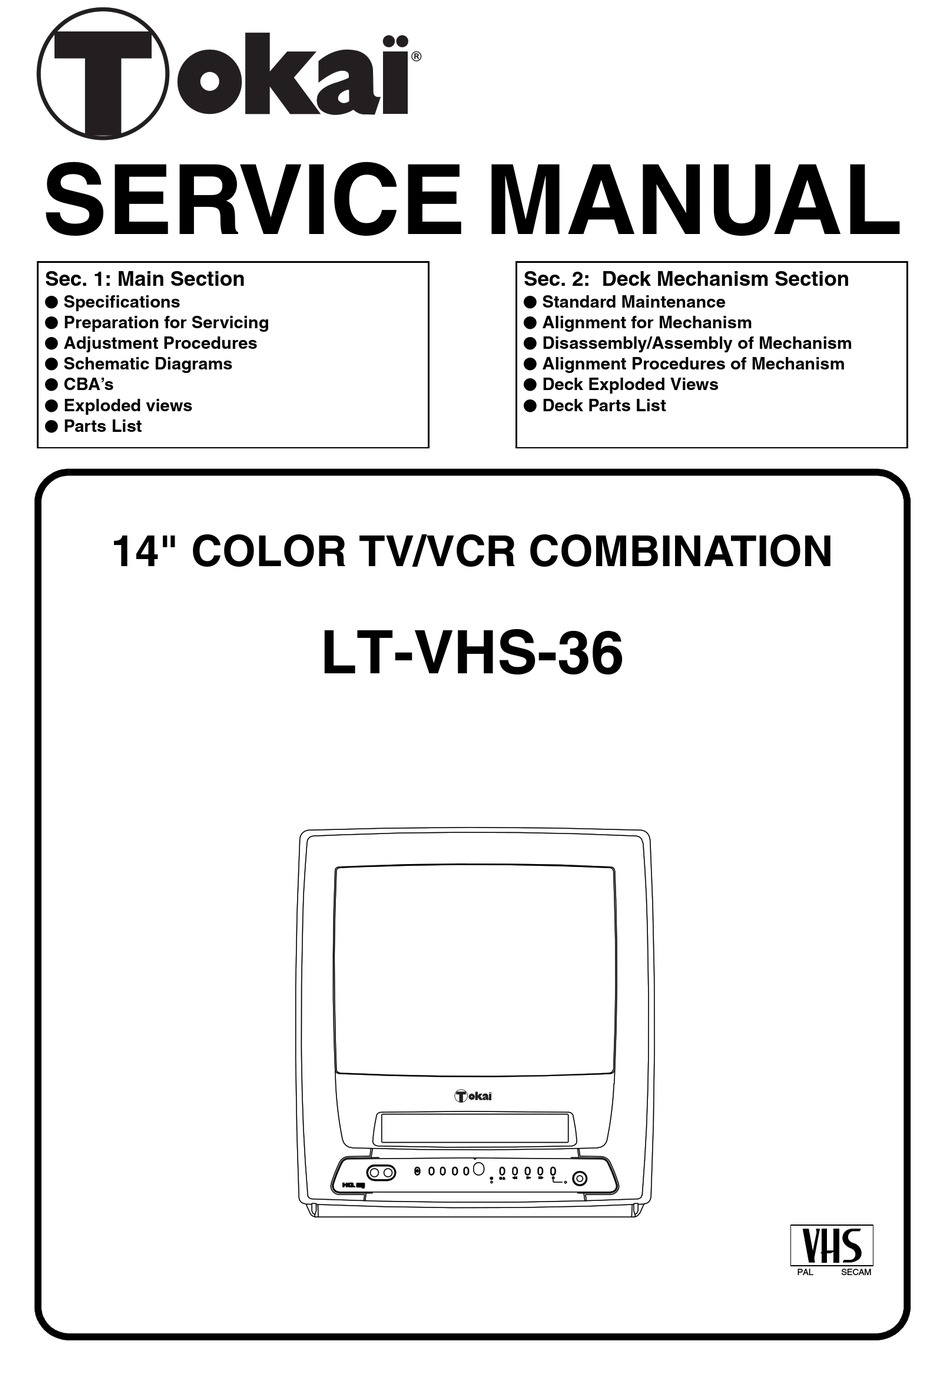 TOKAI LT-VHS-36 SERVICE MANUAL Pdf Download | ManualsLib